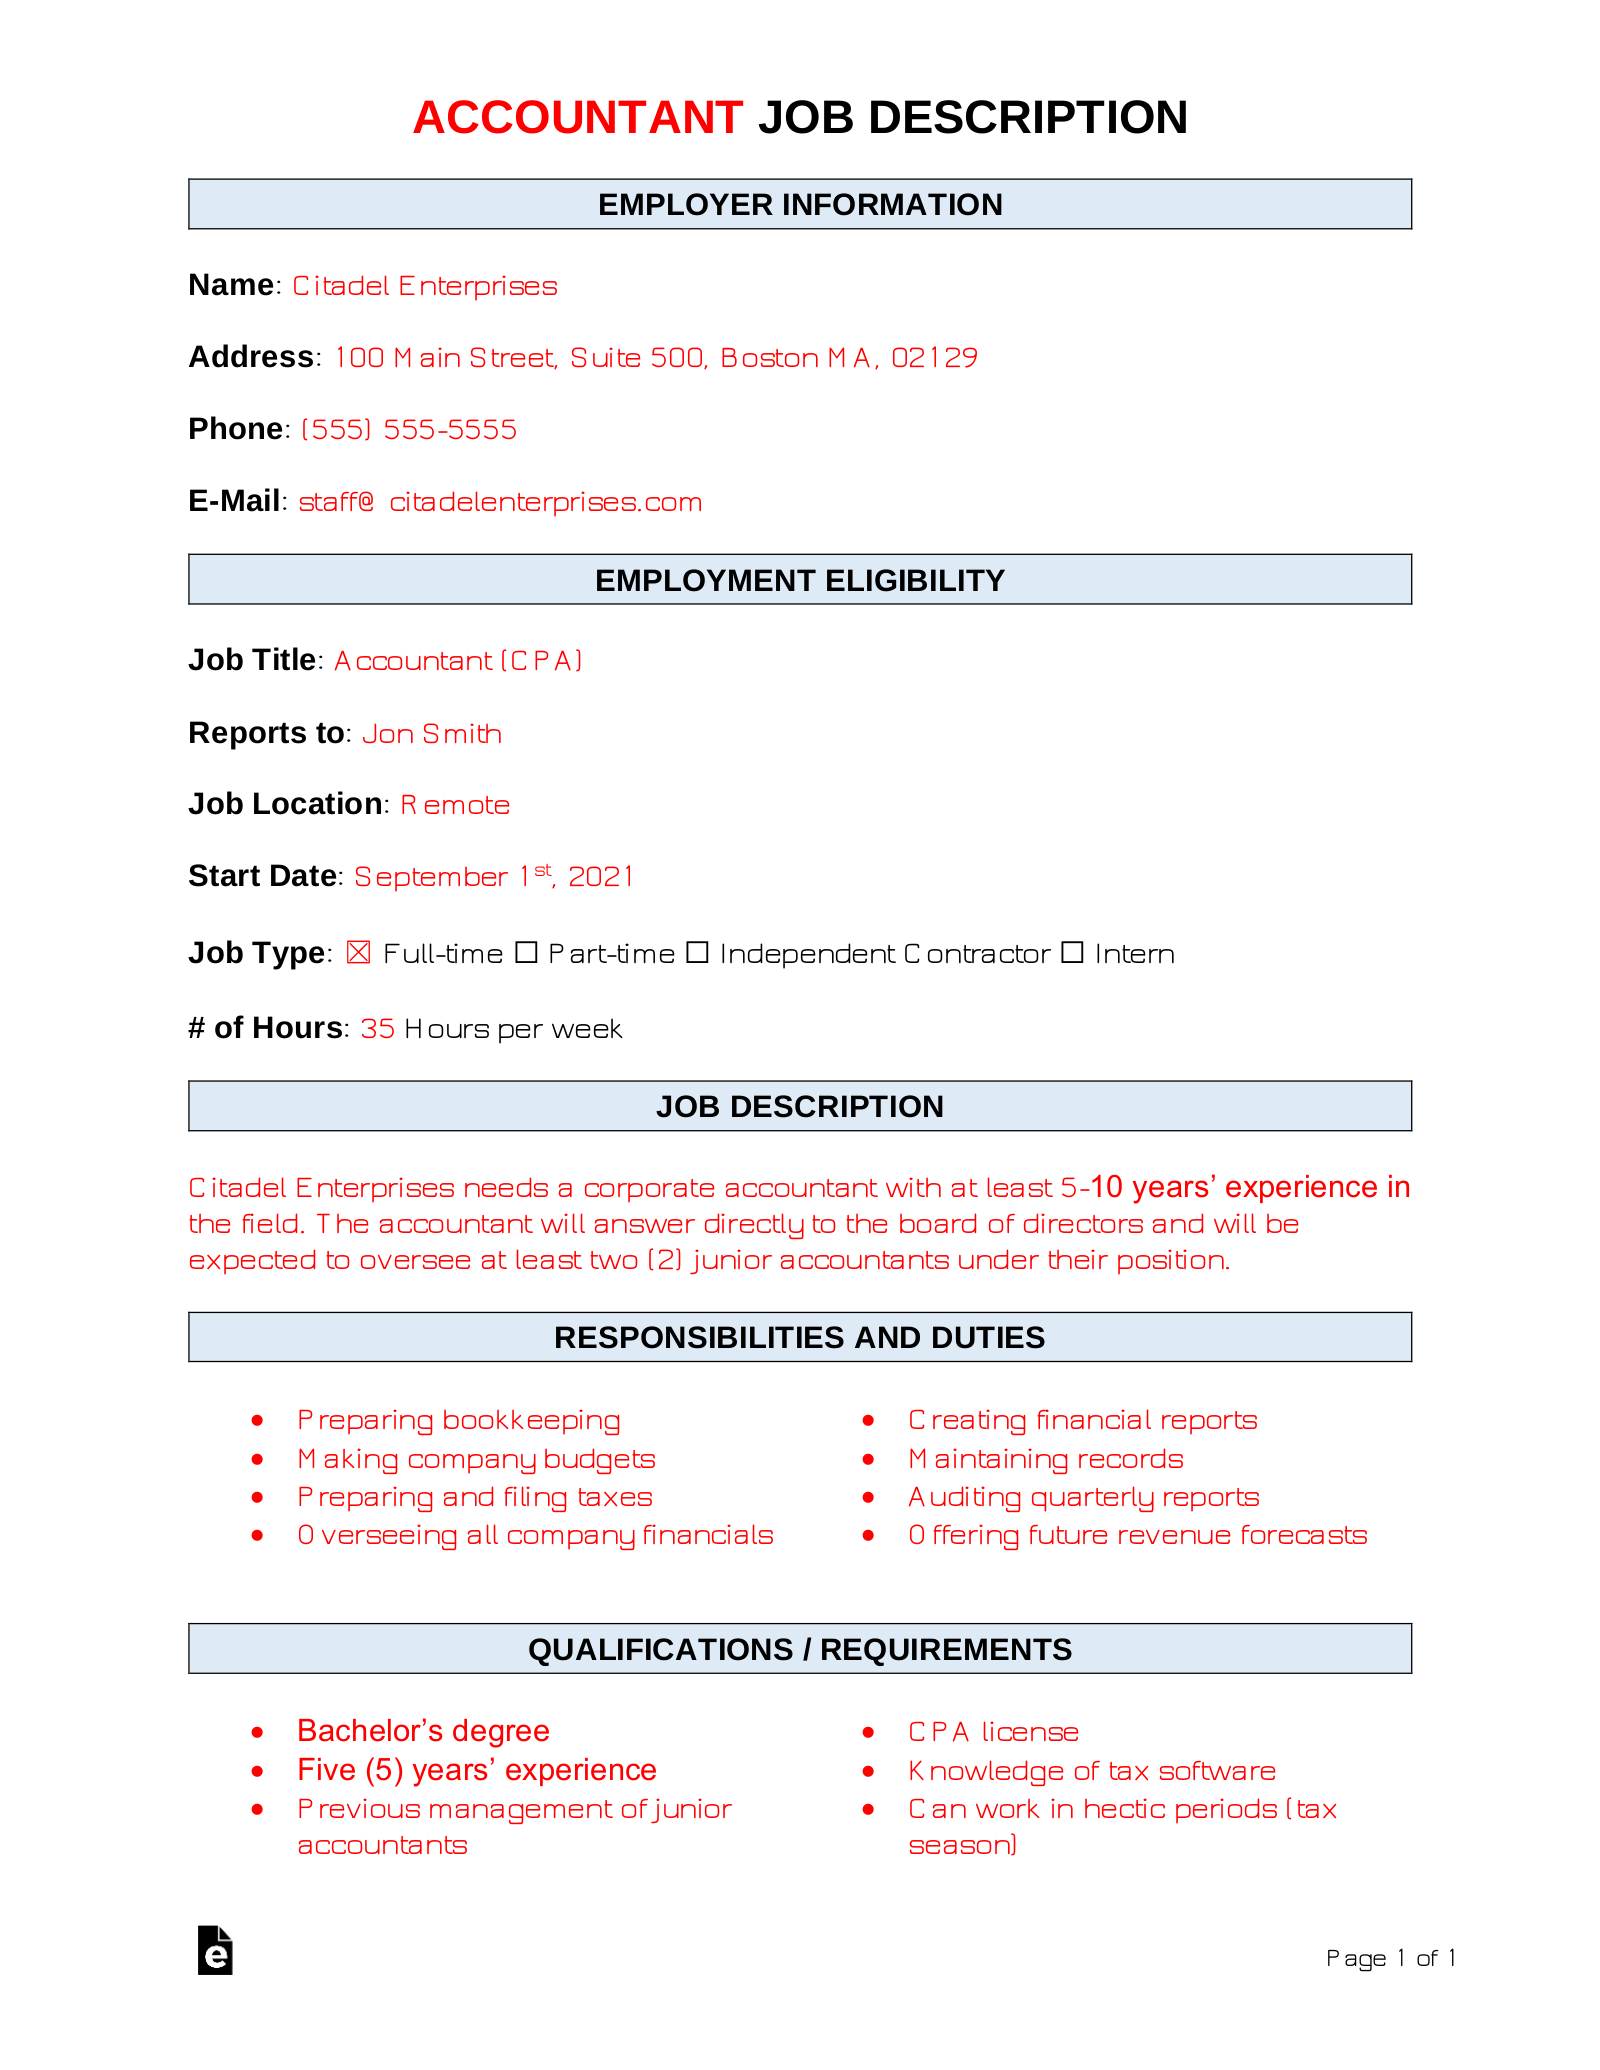 Accountant Job Description Template | Sample